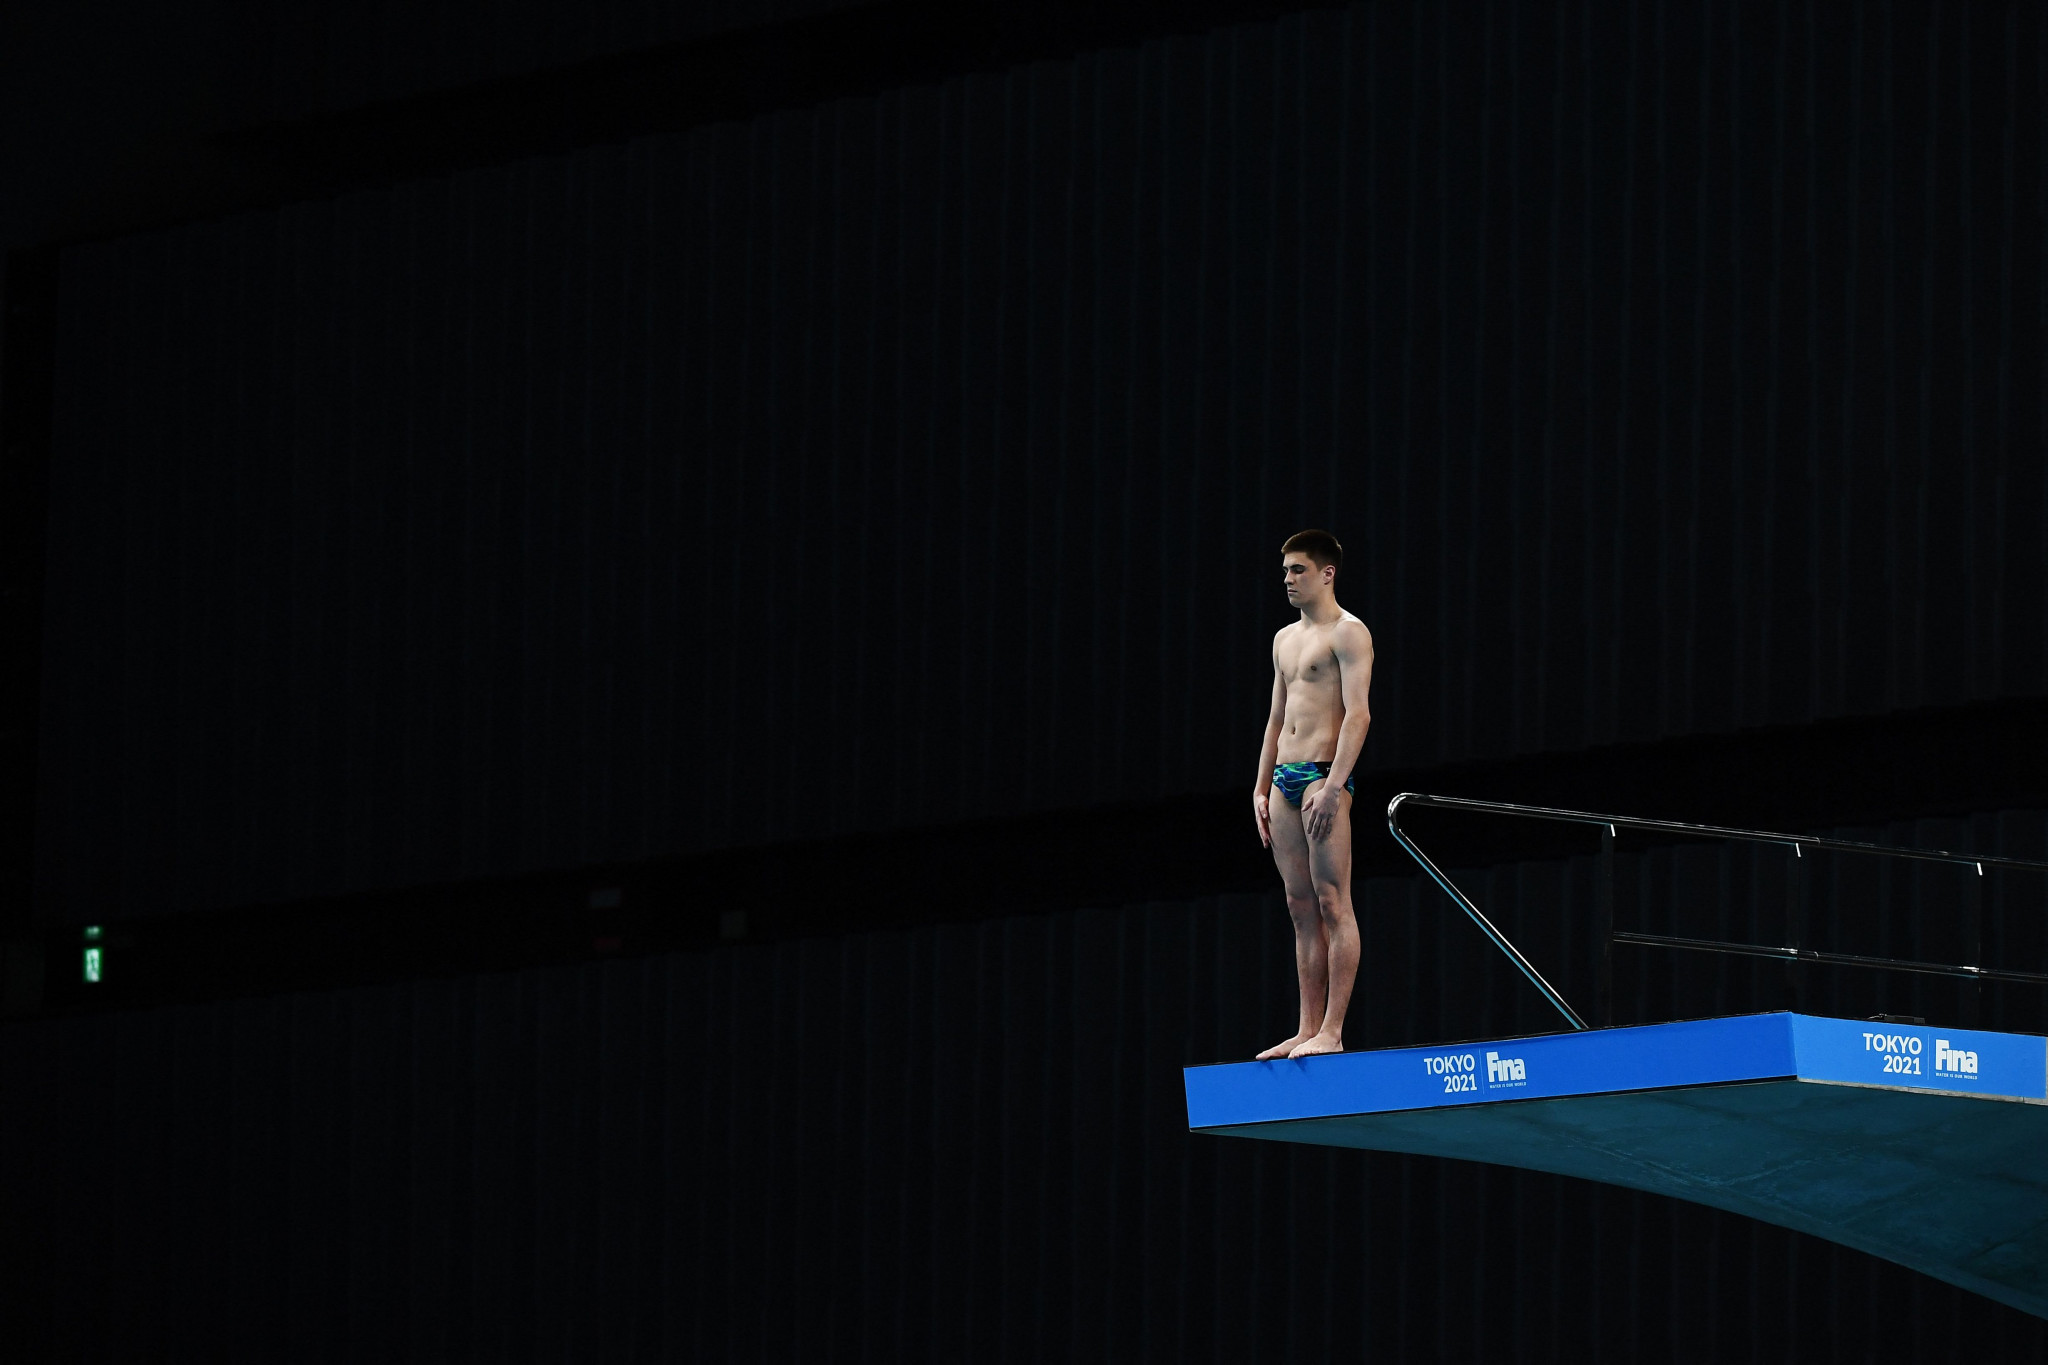 Ruslan Ternovoi led the men's 10m platform semi-final ©Getty Images